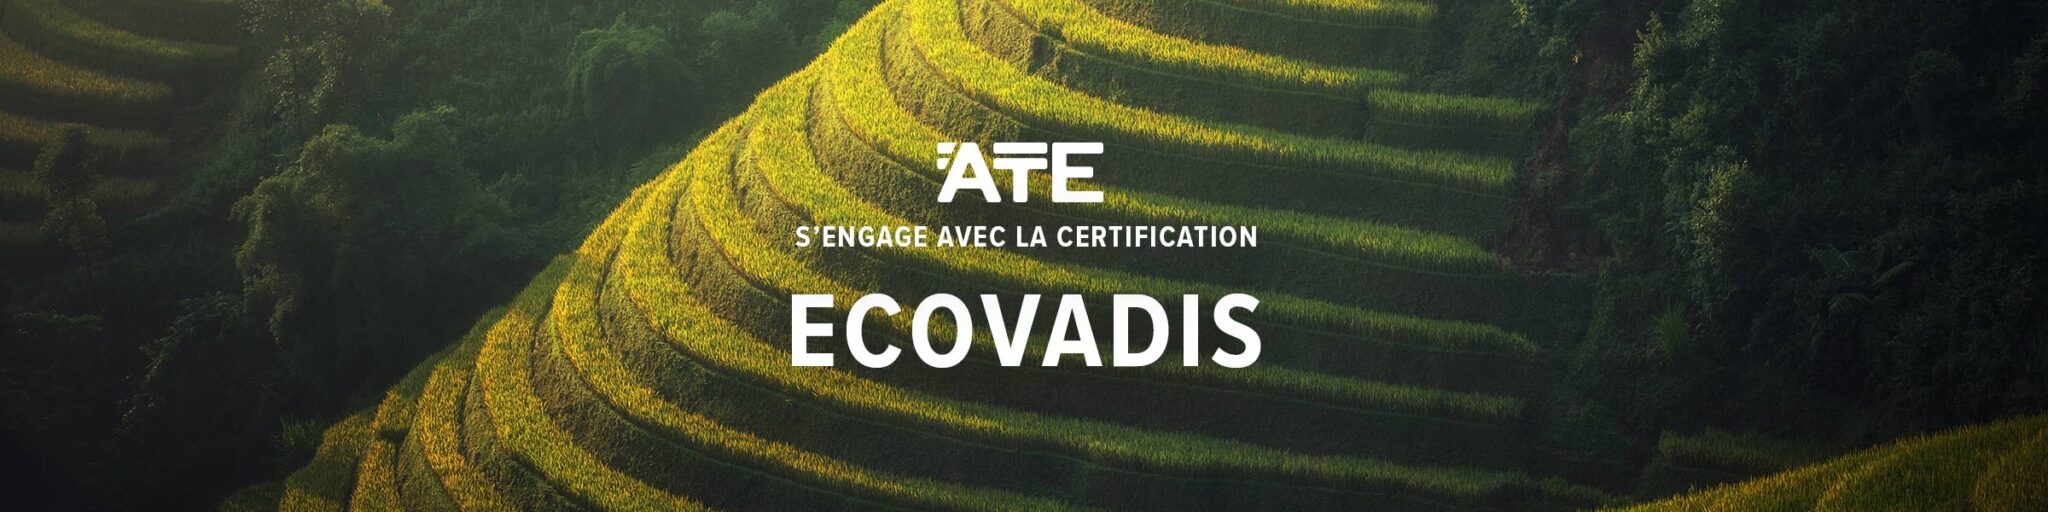 ATE s'engage avec la certification Ecovadis